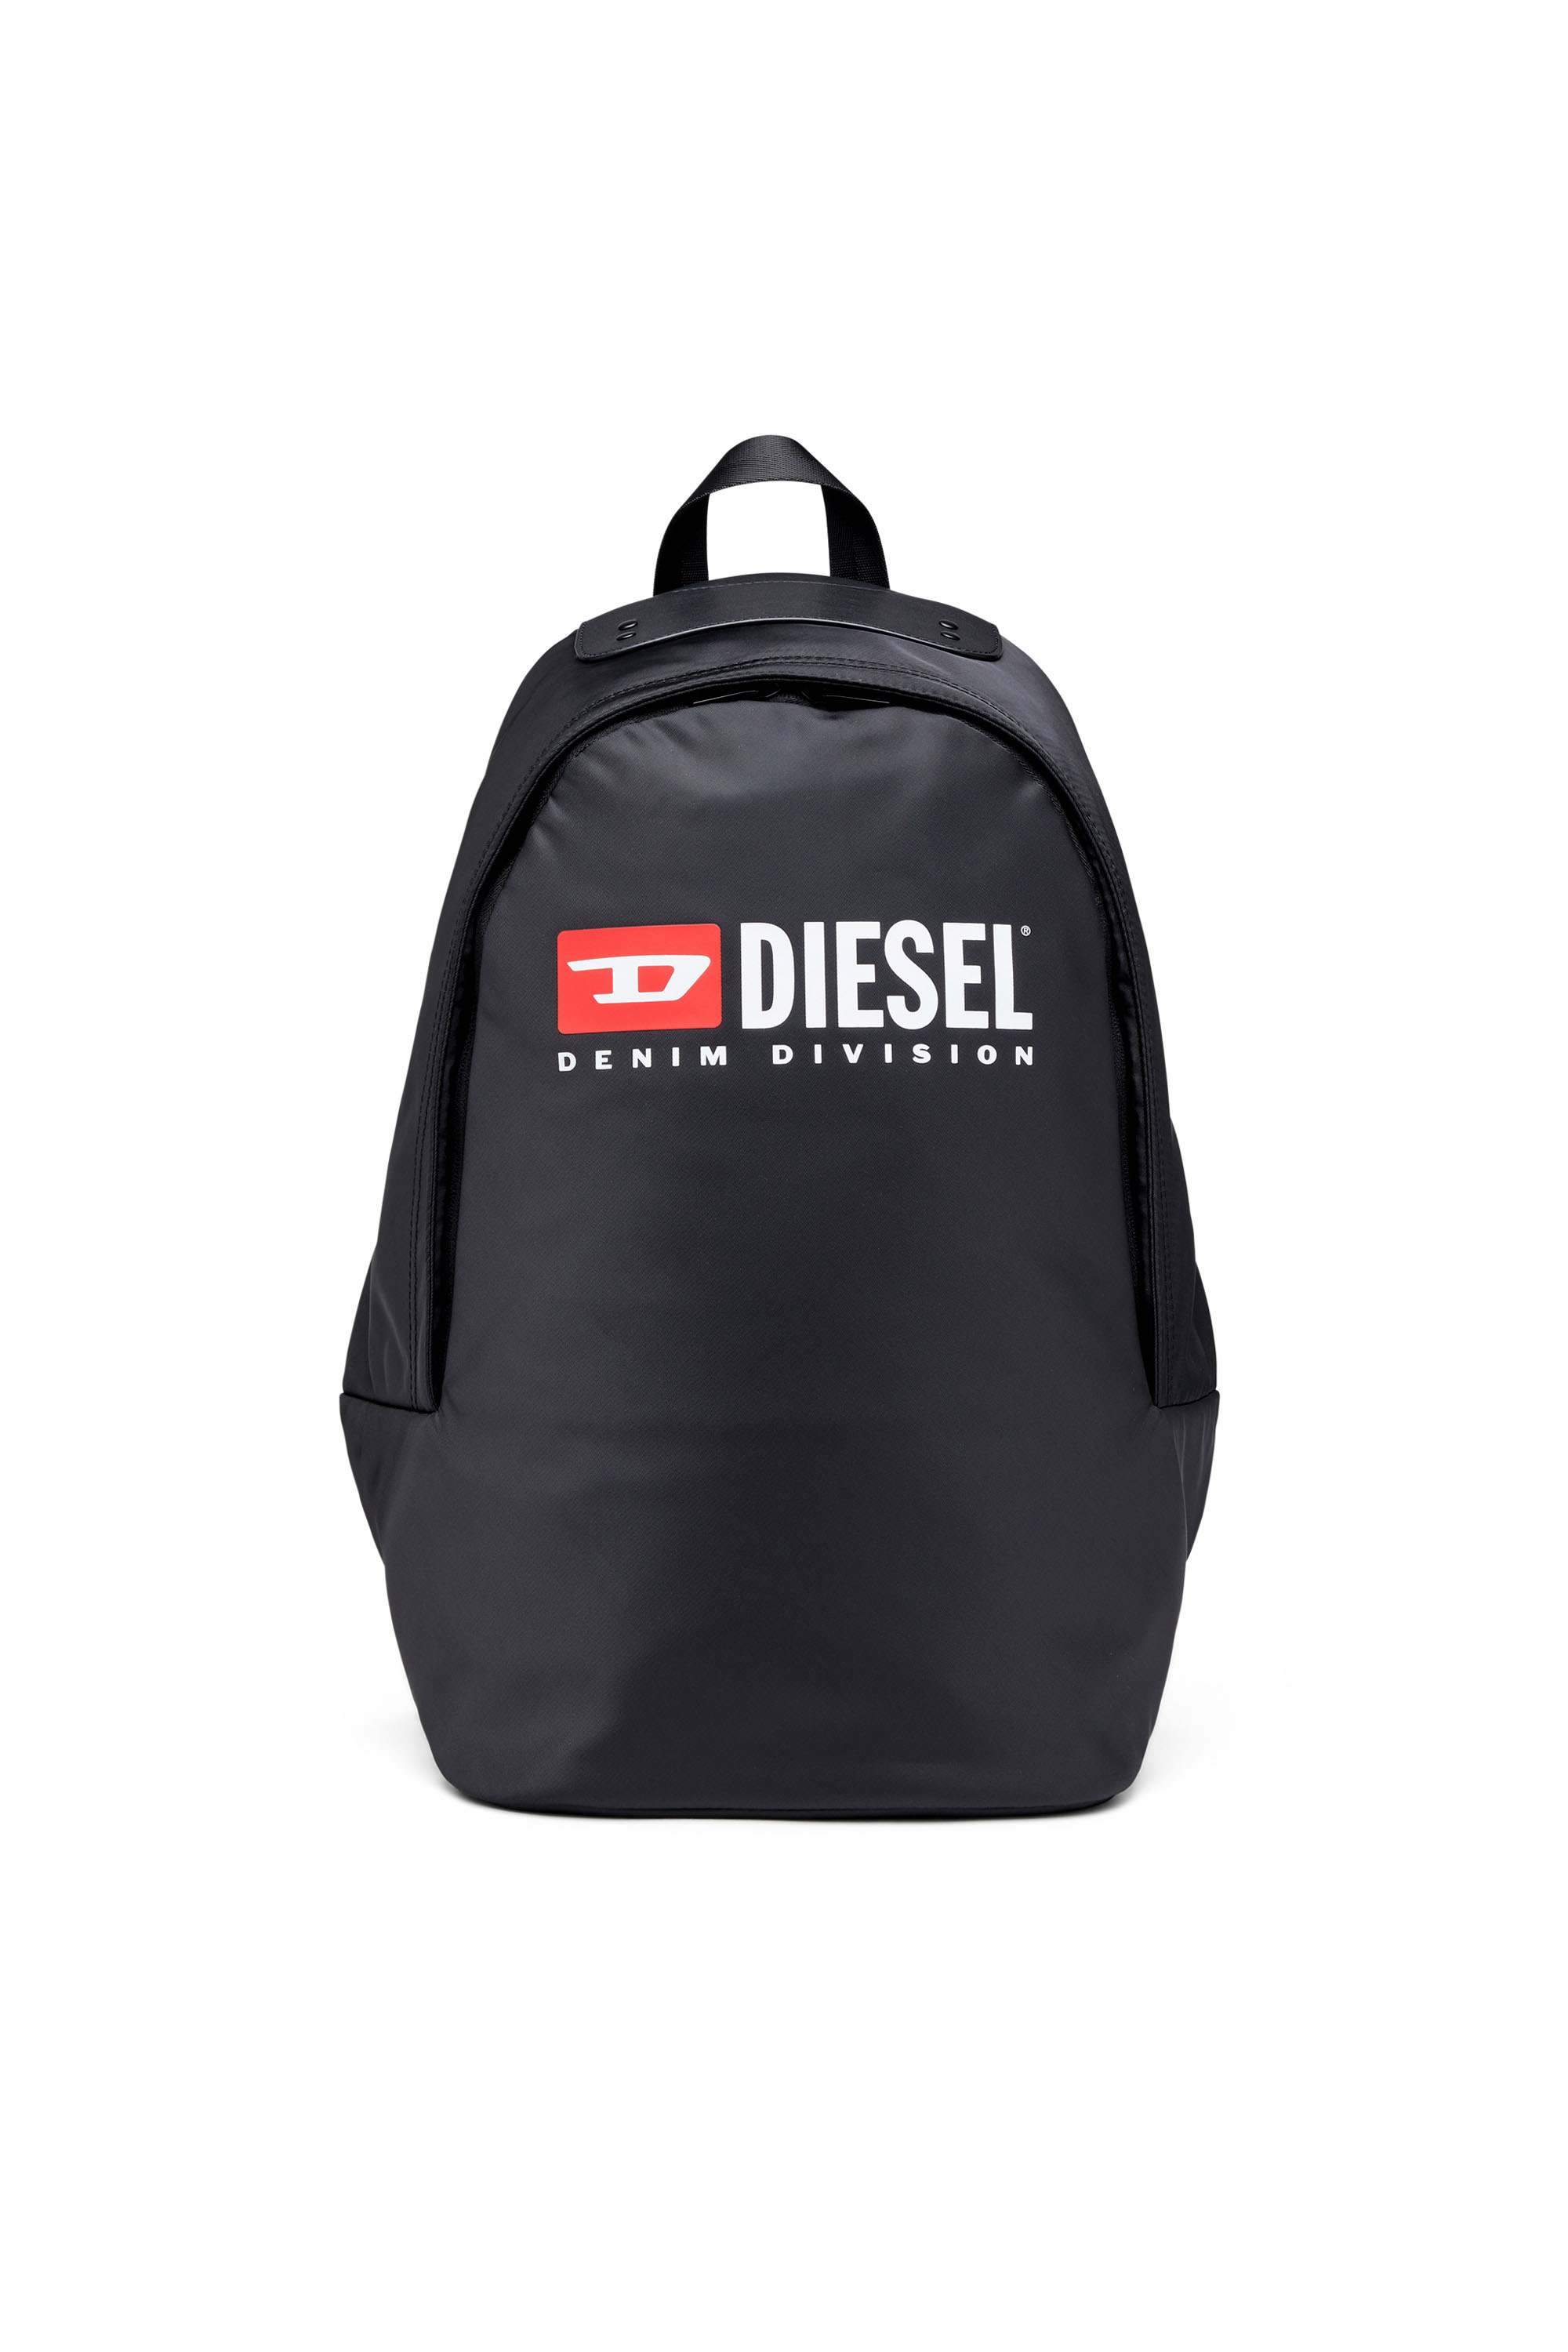 Diesel - Rinke Backpack - Backpack in technical fabric with logo - Backpacks - Man - Black